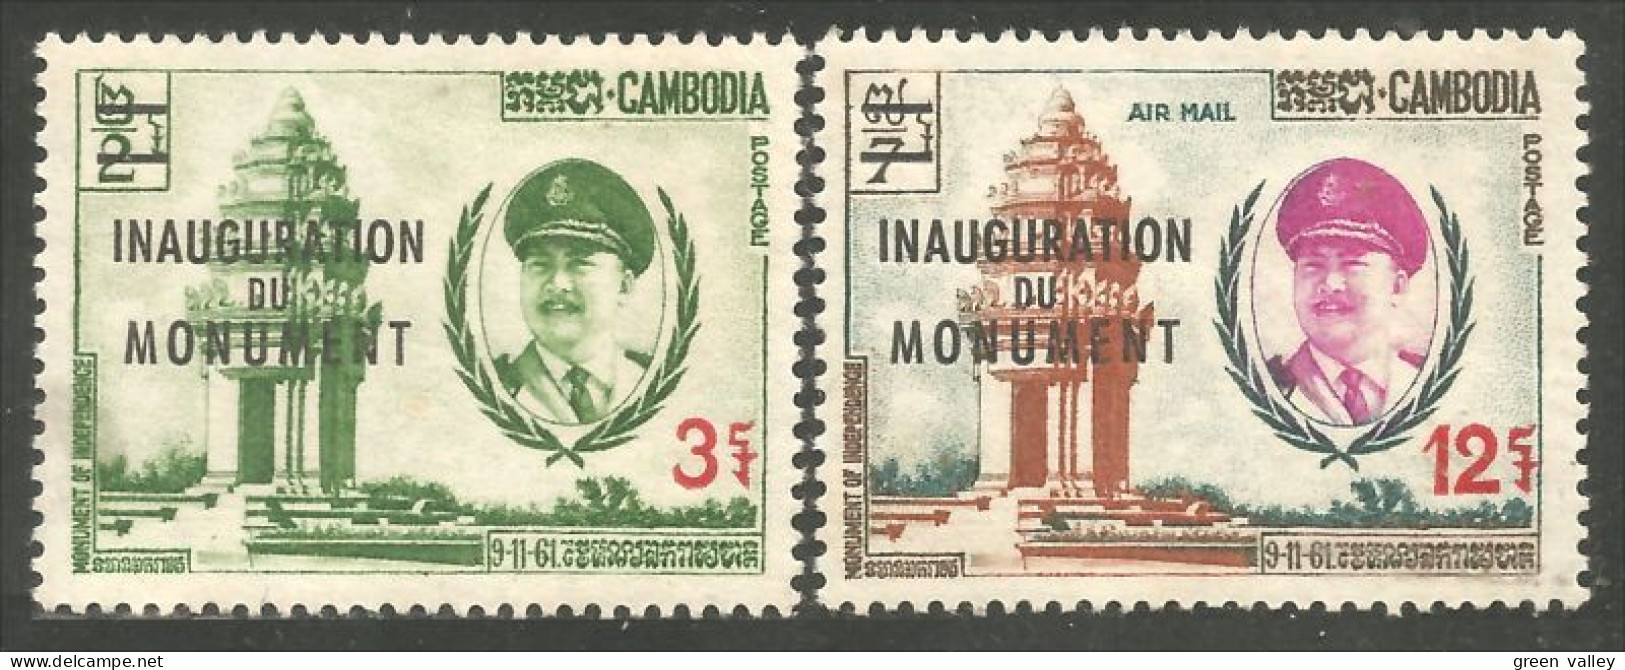 534 Cambodge Inauguration Monument Surcharge MVLH * Neuf Très Légère (KAM-307) - Kambodscha